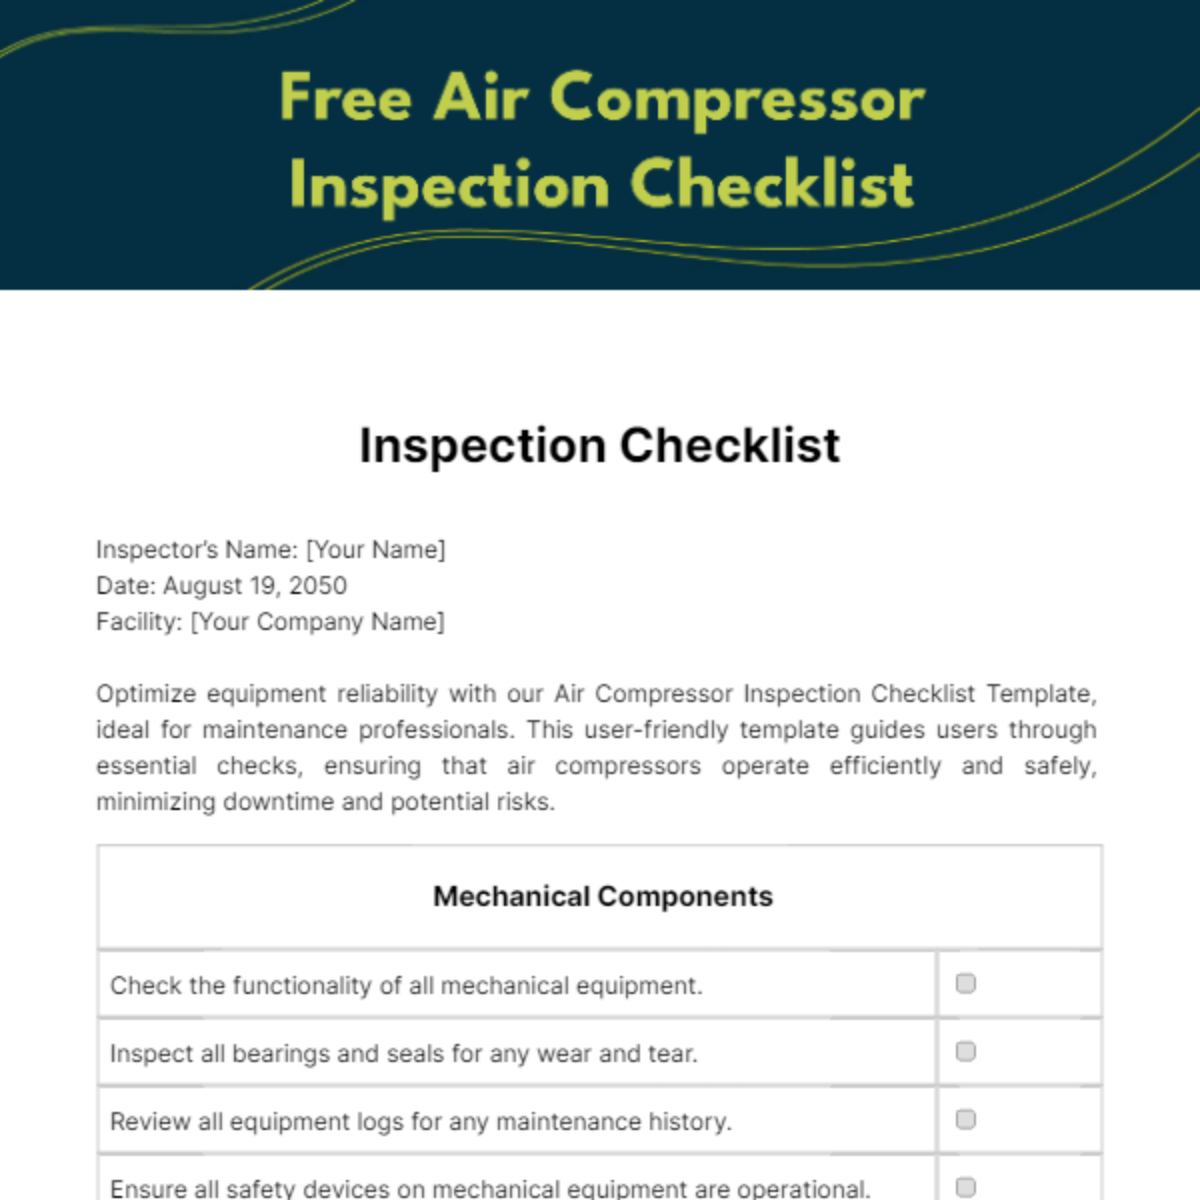 Free Air Compressor Inspection Checklist Template